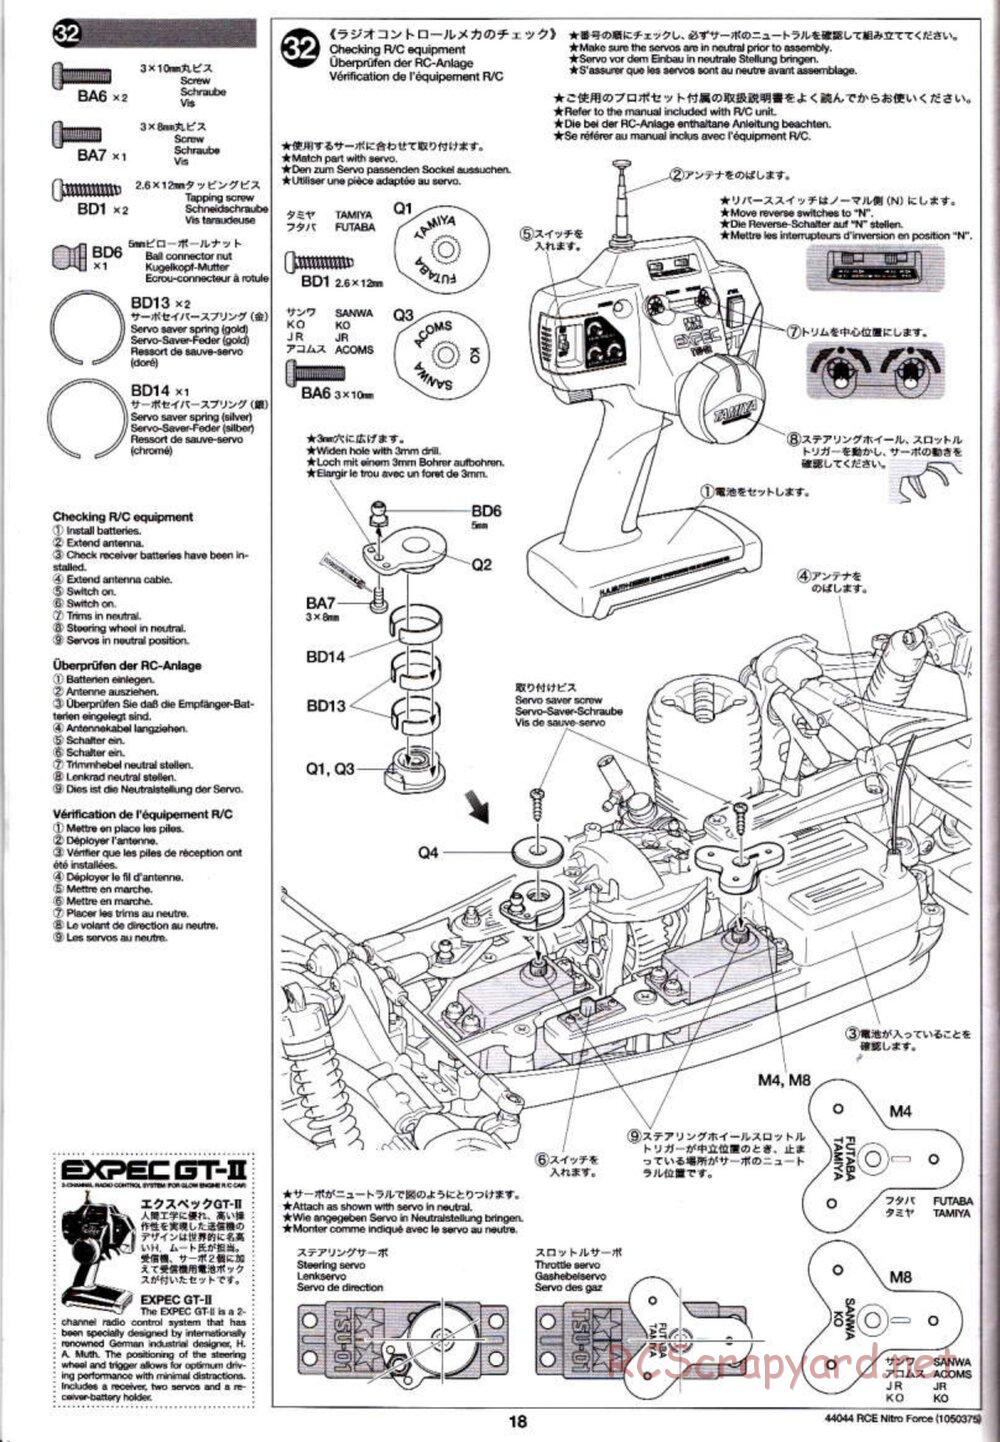 Tamiya - Nitro Force - NDF-01 Chassis - Manual - Page 18